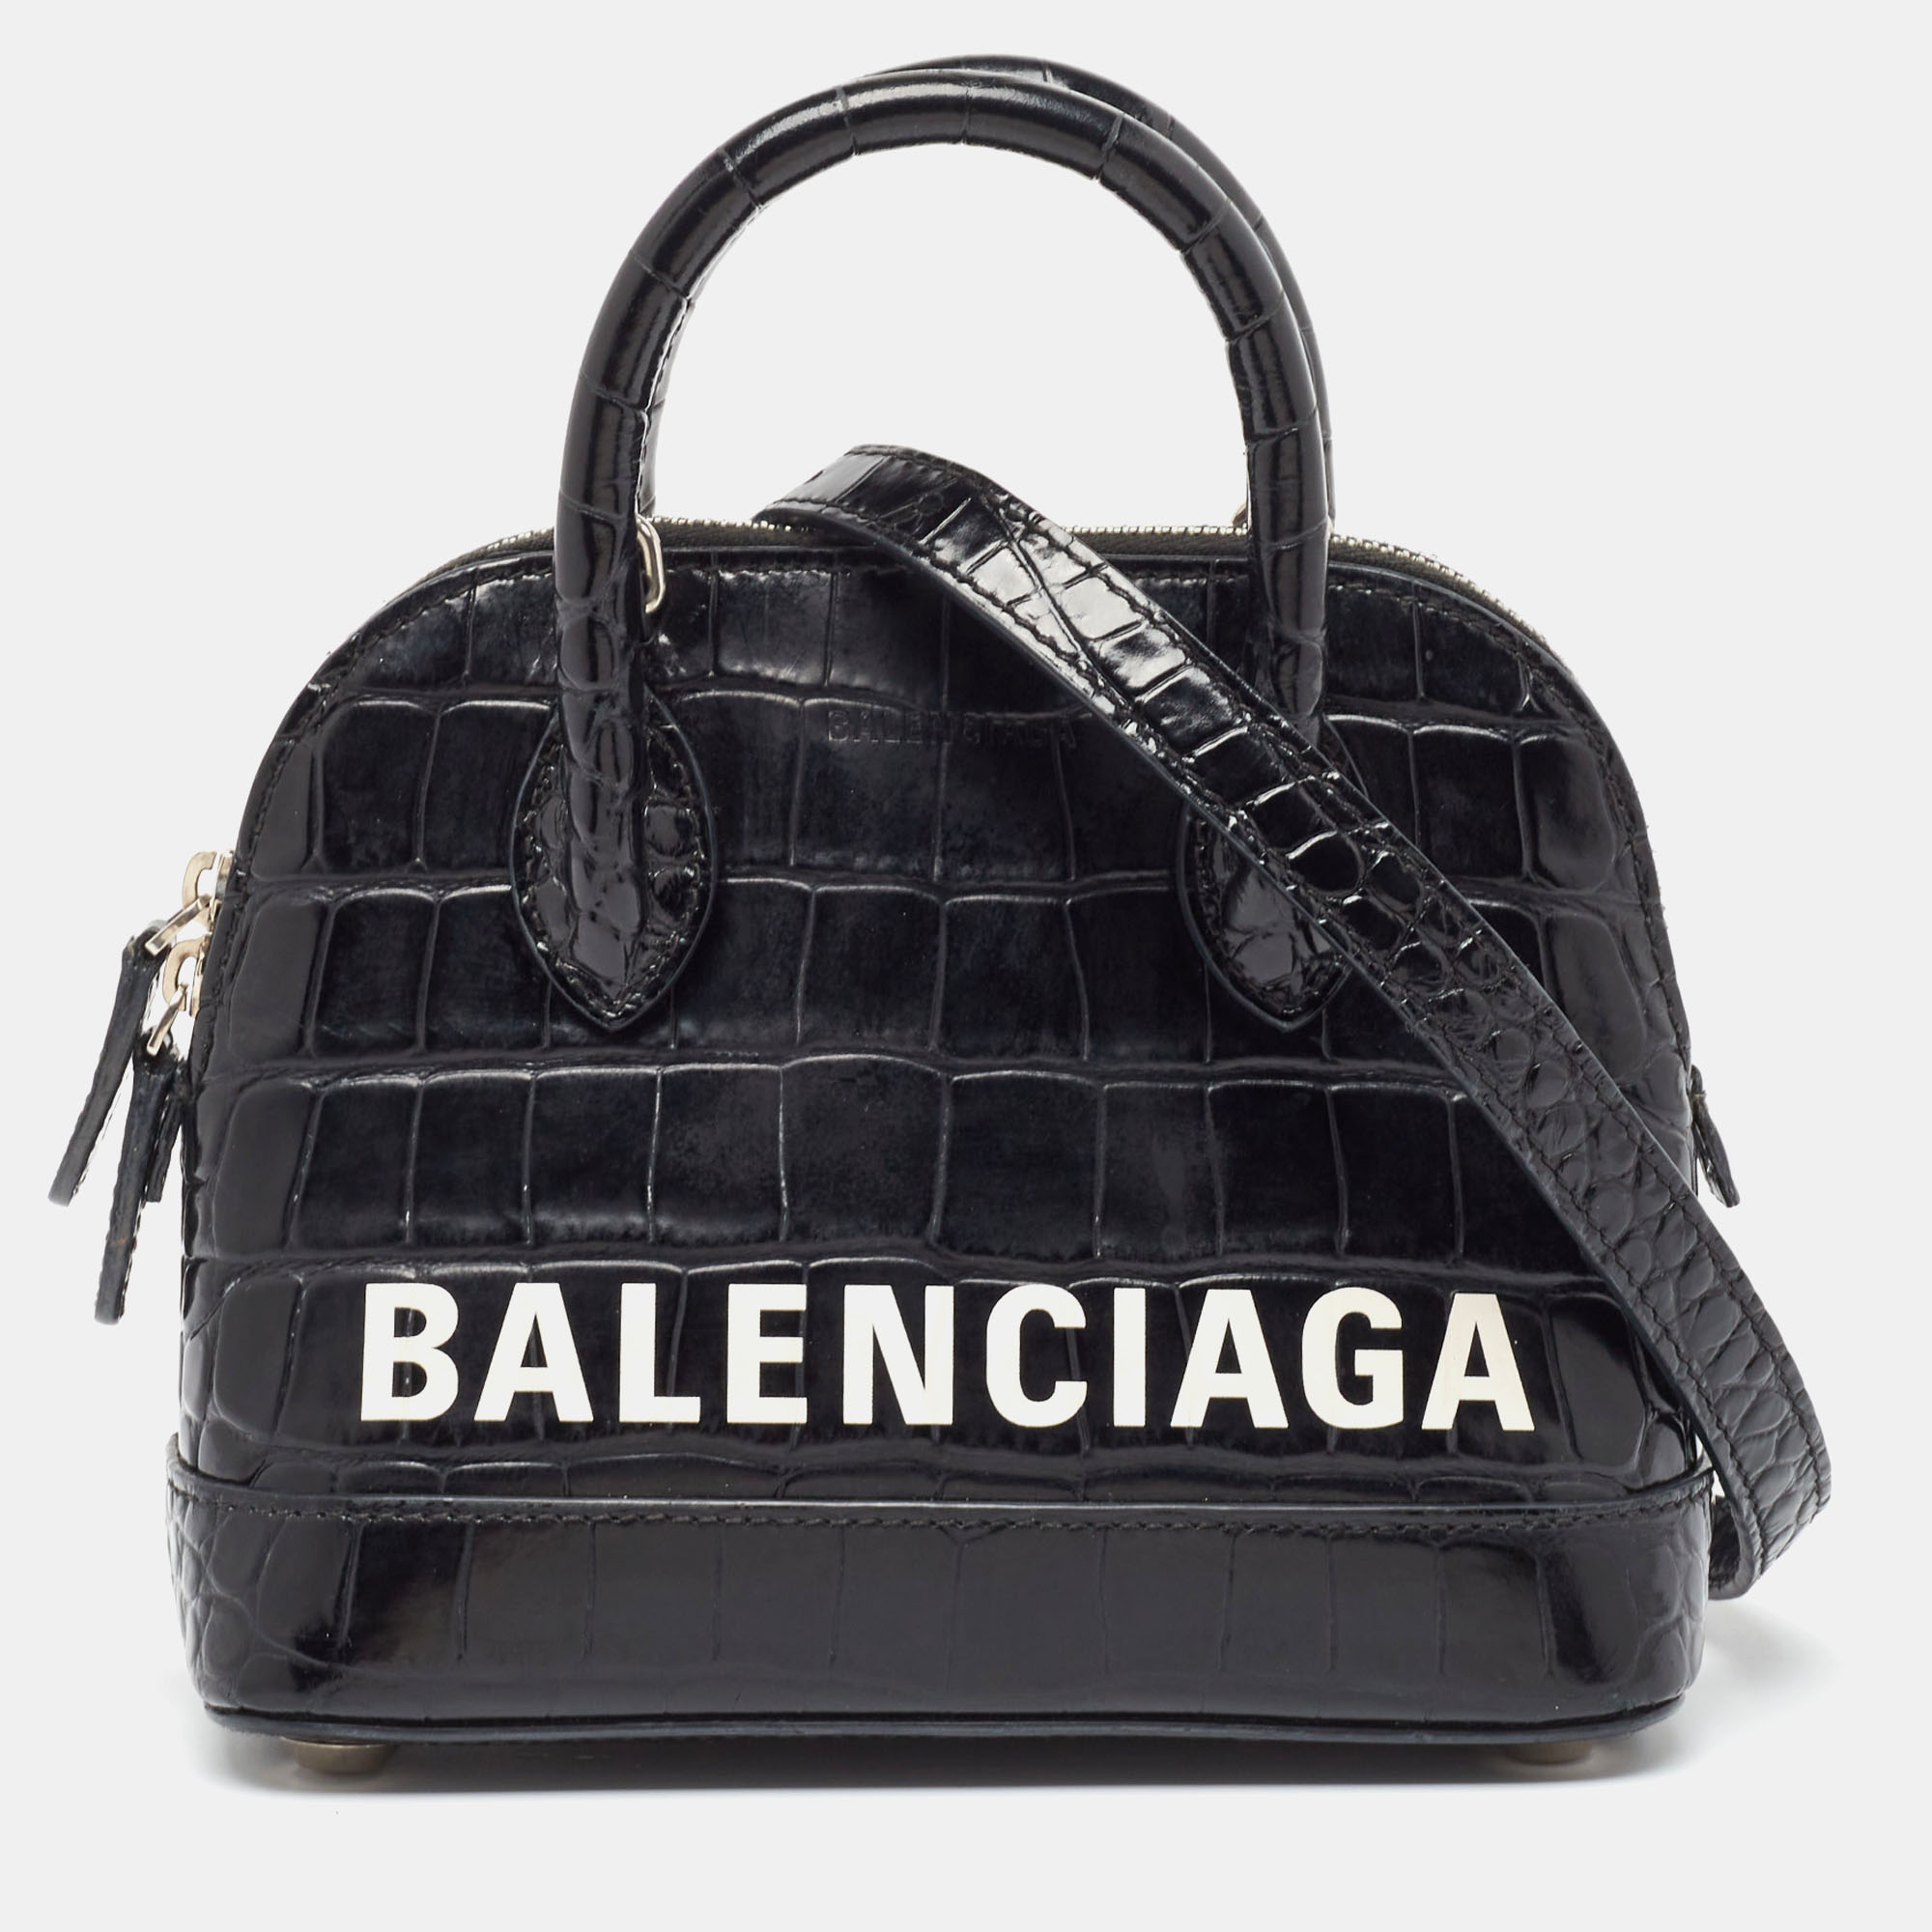 Balenciaga black croc embossed leather xxs ville satchel